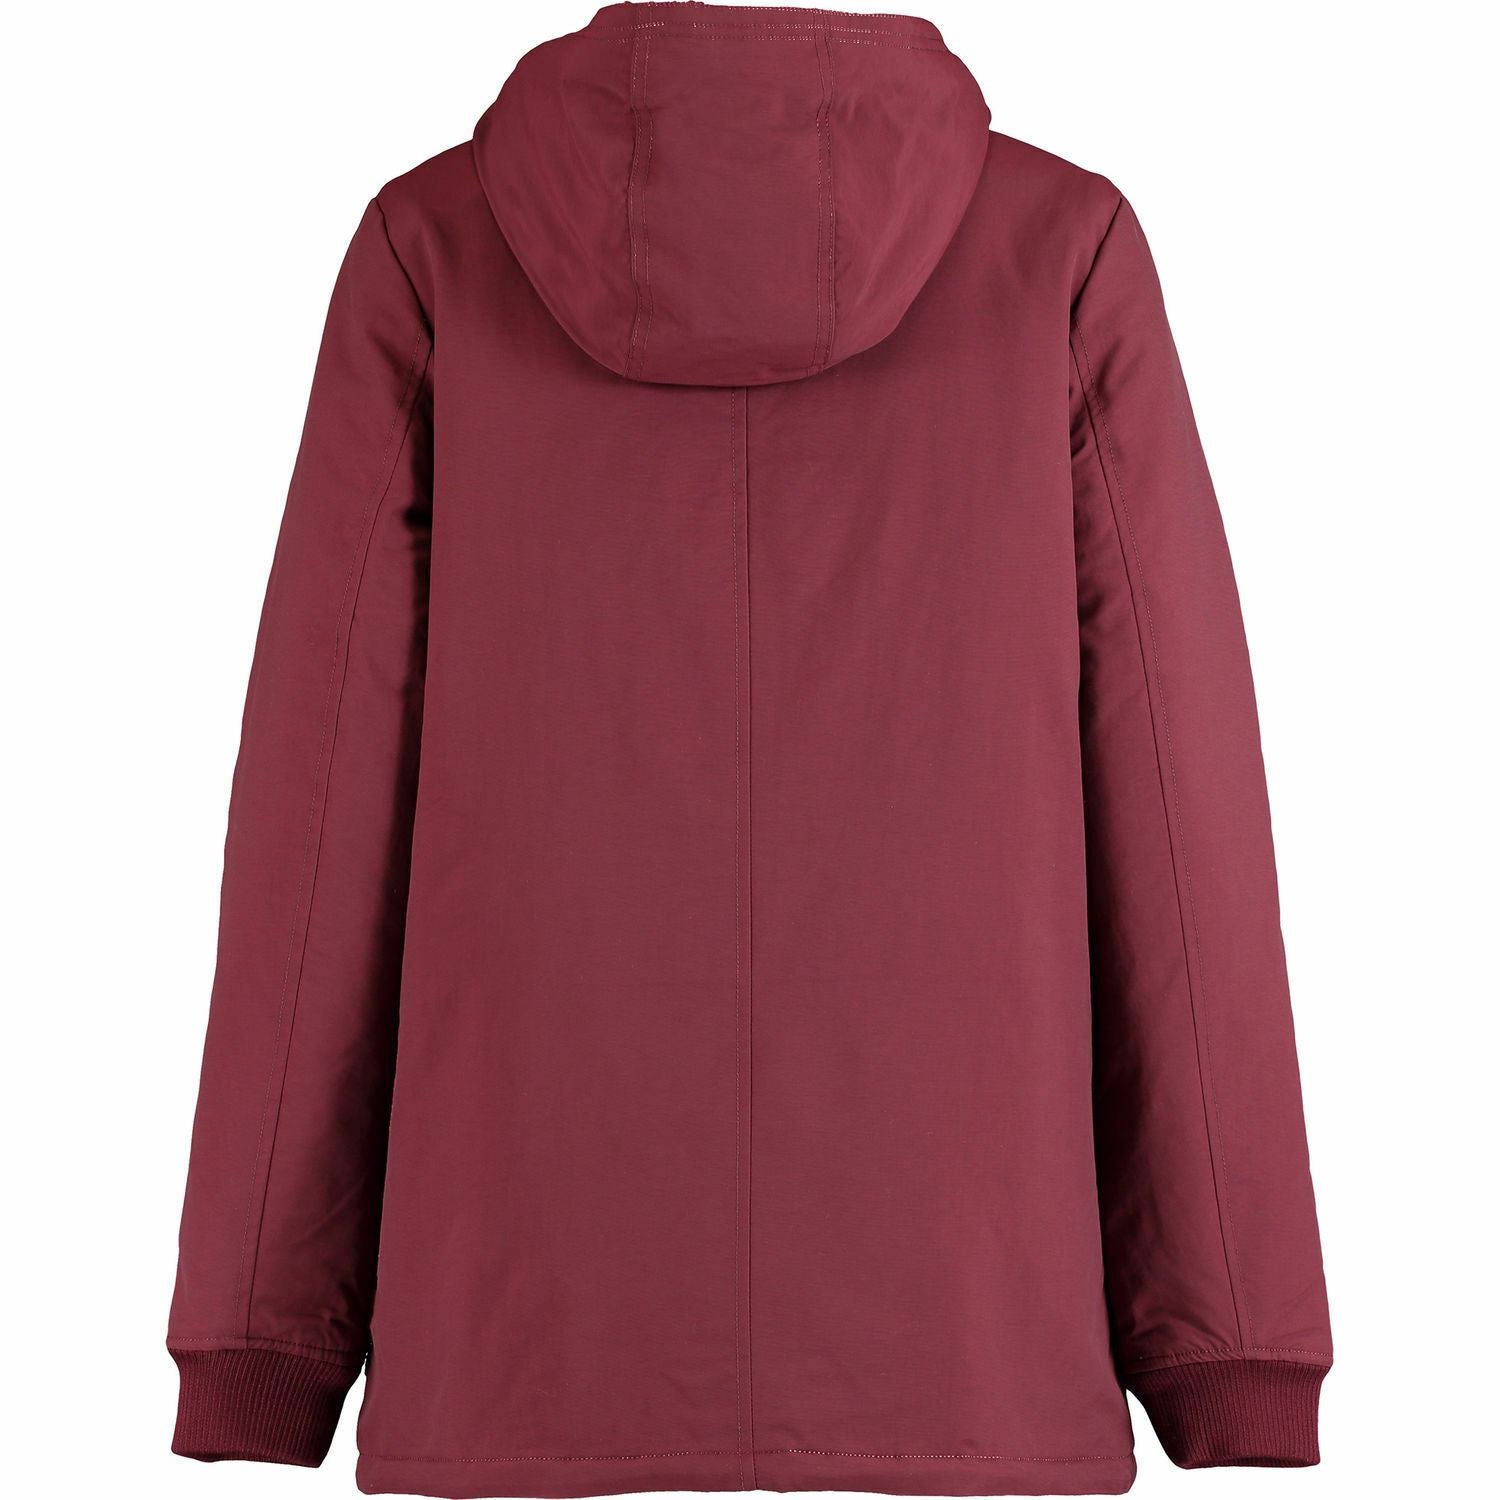 VANS Women's INFERNO Parka/Jacket/Coat, Burgundy, size XS size S